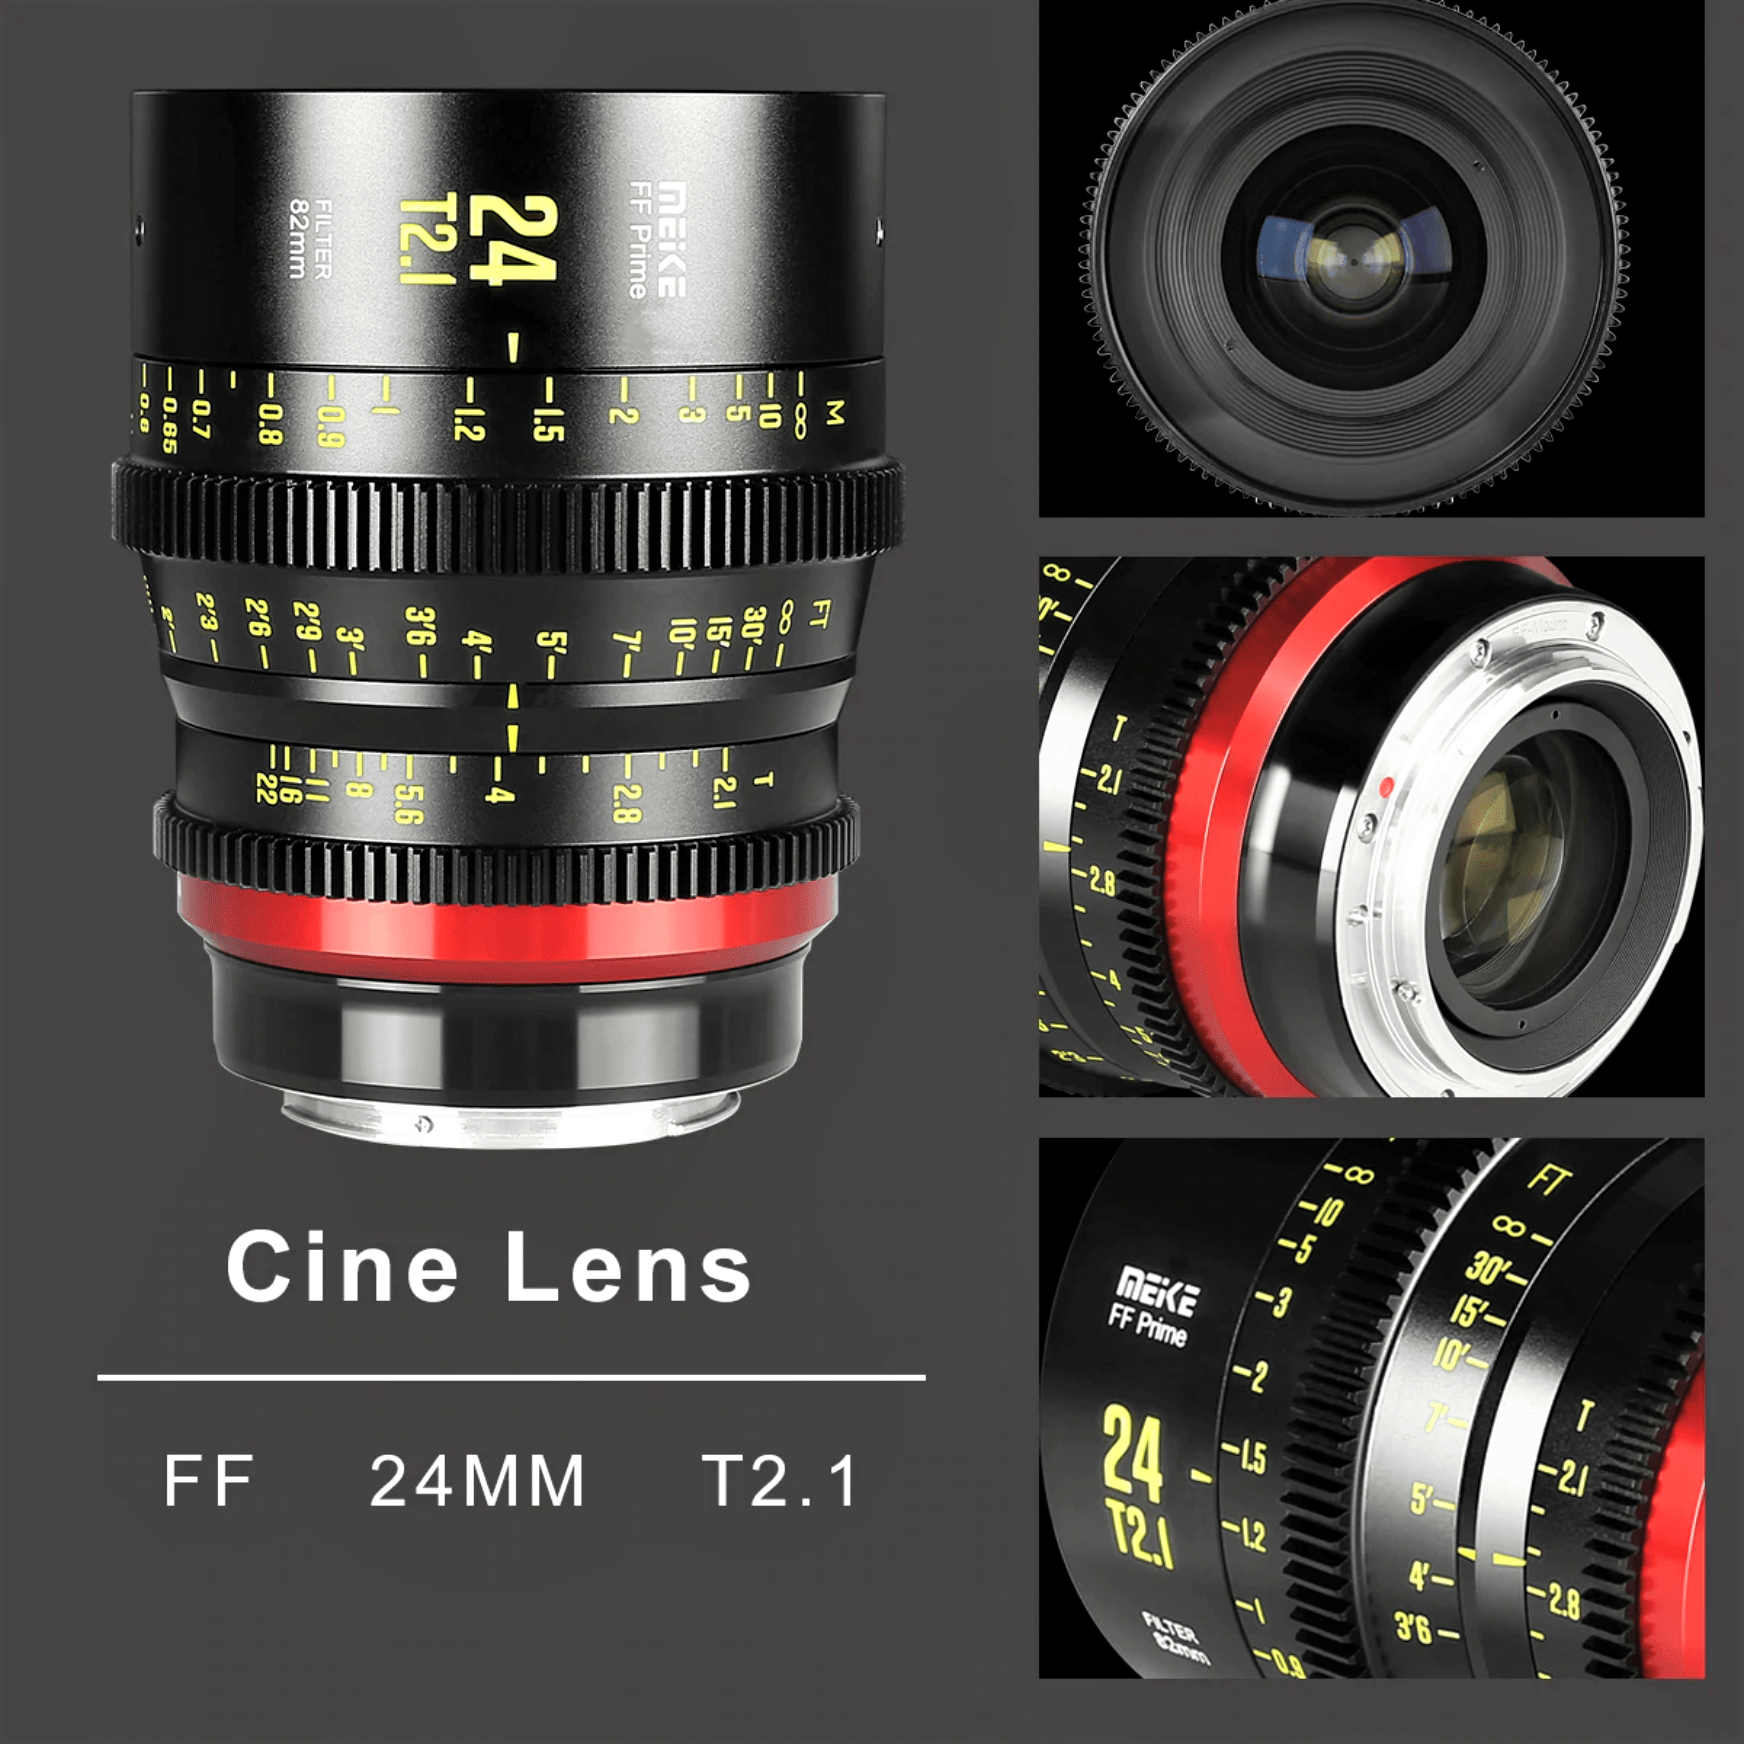 Meike Cinema Full Frame Cinema Prime 24mm T2.1 Lens (RF Mount) in Different Perspectives